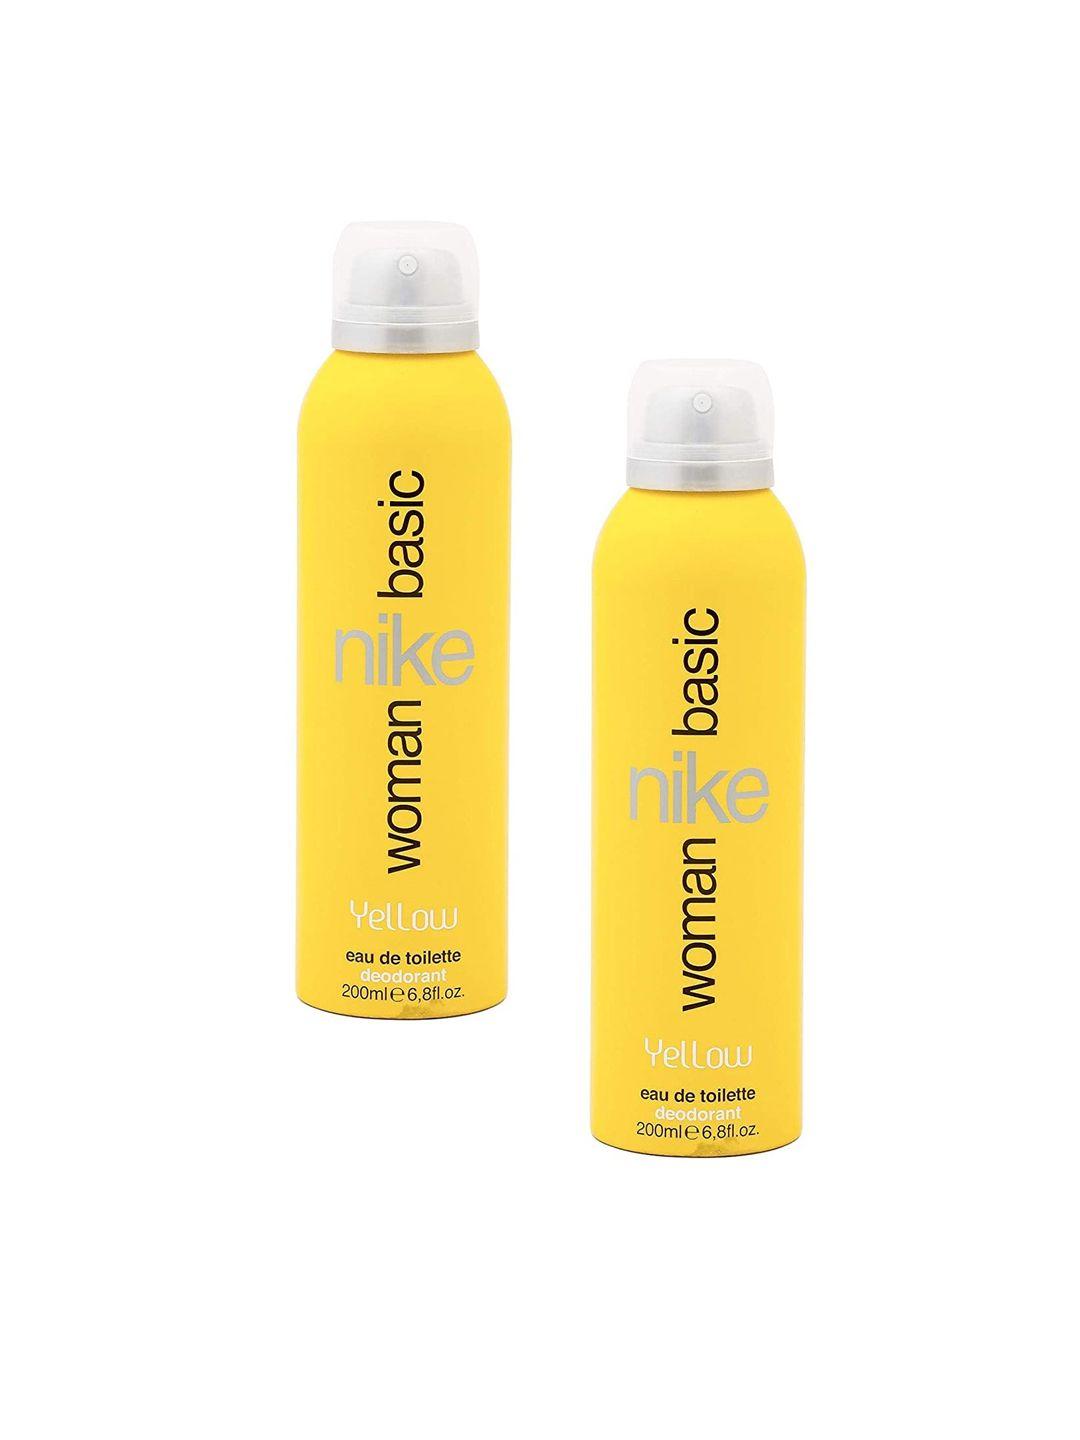 nike woman pack of 2 basic yellow deodorant- 200ml each